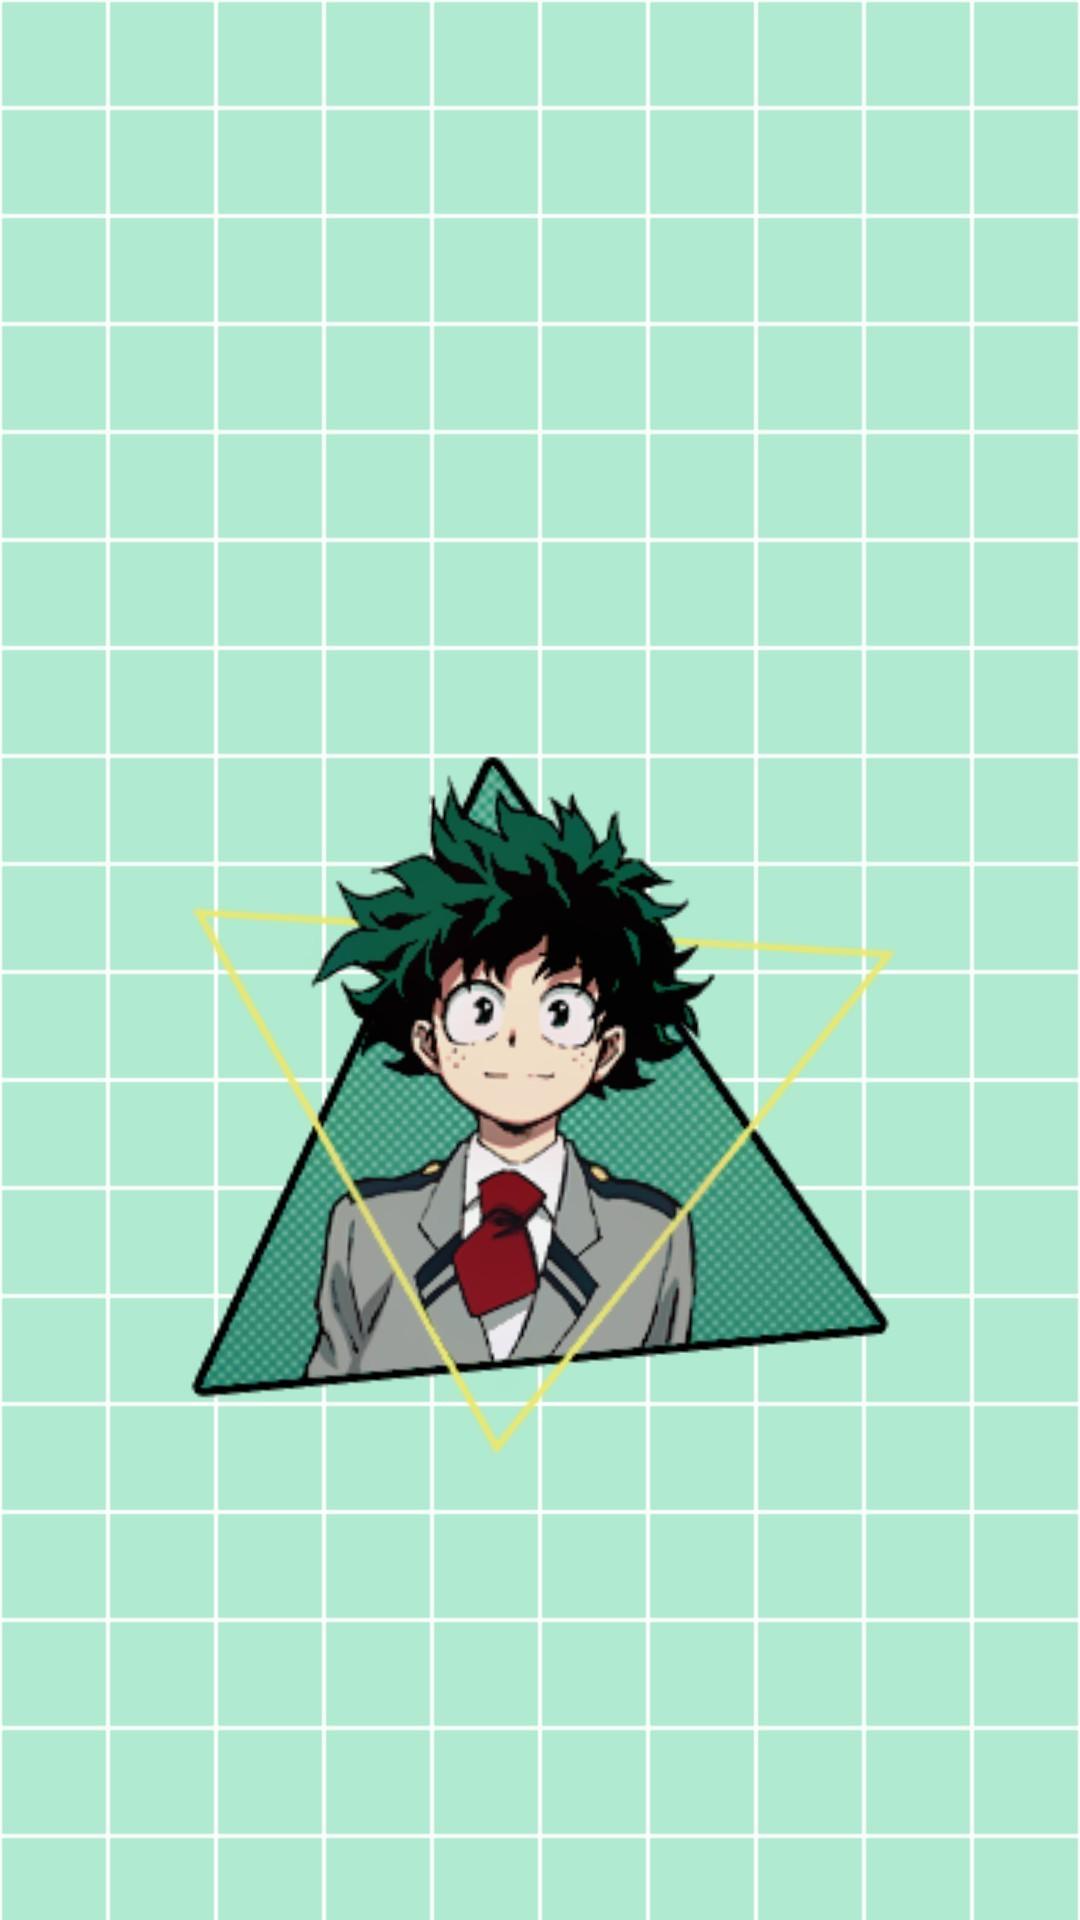 Aesthetic anime wallpaper for phone with green haired boy from My Hero Academia - My Hero Academia, Deku